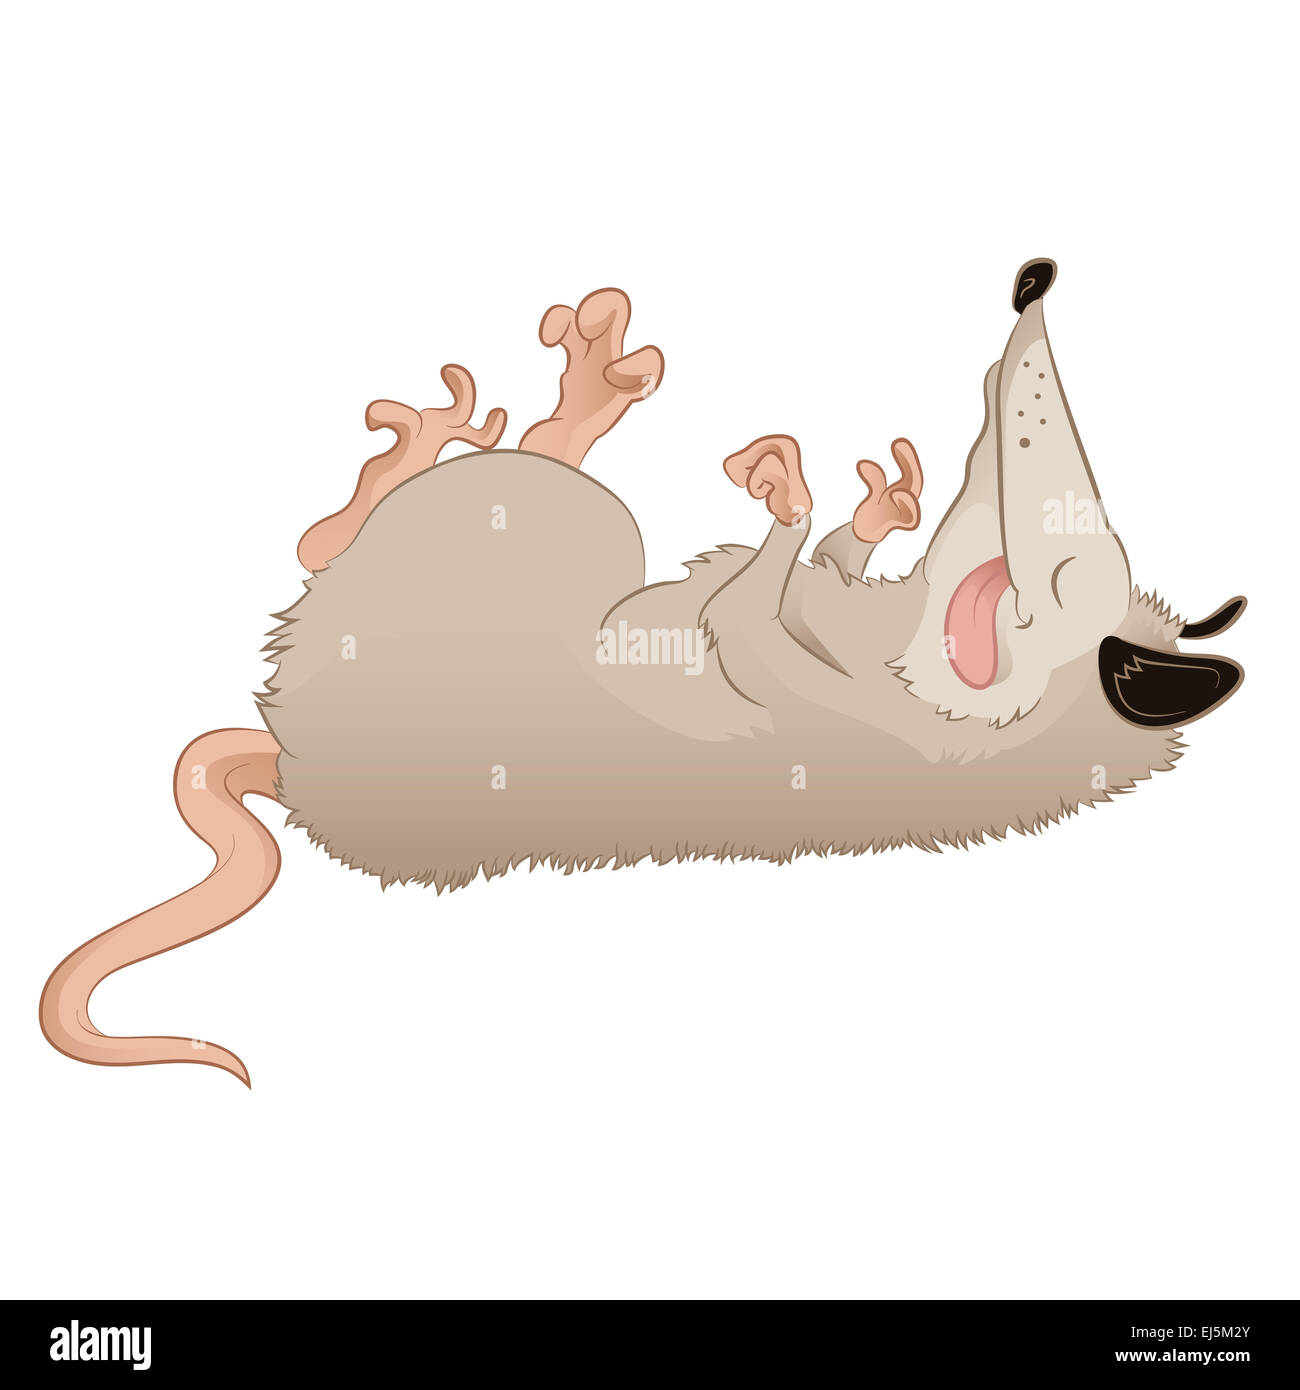 Vector image of a cartoon deadlike Opossum Stock Photo